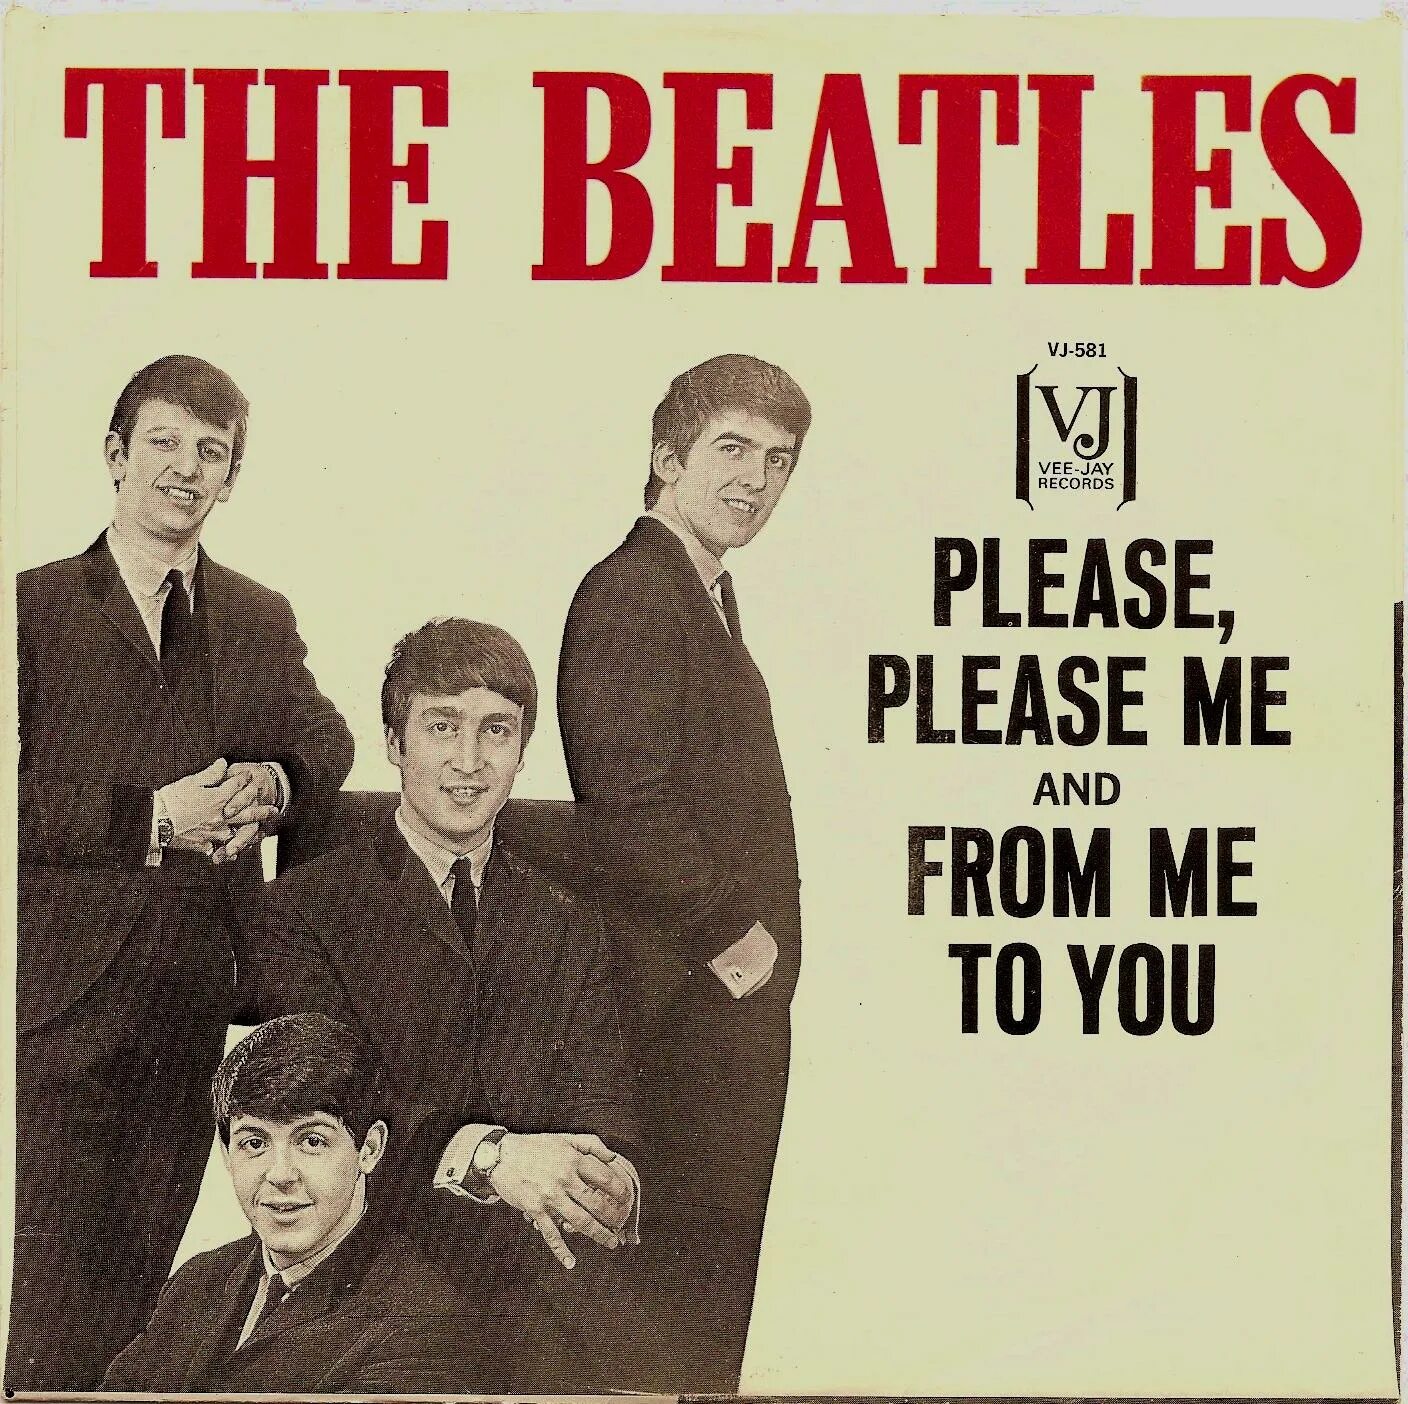 Плиз фогив ми. The Beatles please please me 1963 обложка. Please please me the Beatles обложка. Please please me the Beatles обложка альбома. Битлз please please me альбом.